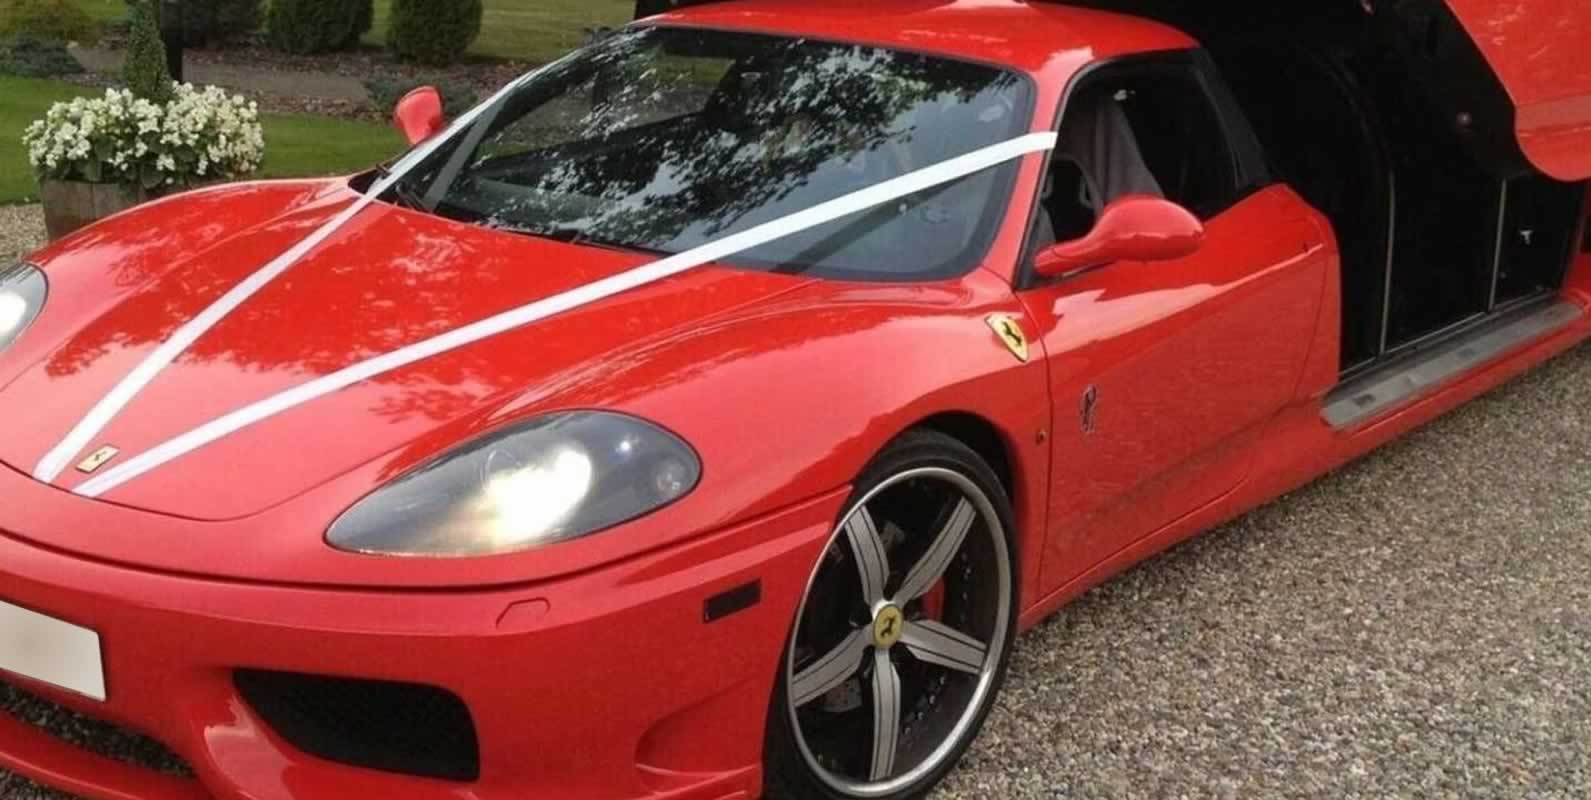 Red Ferrari wedding limo